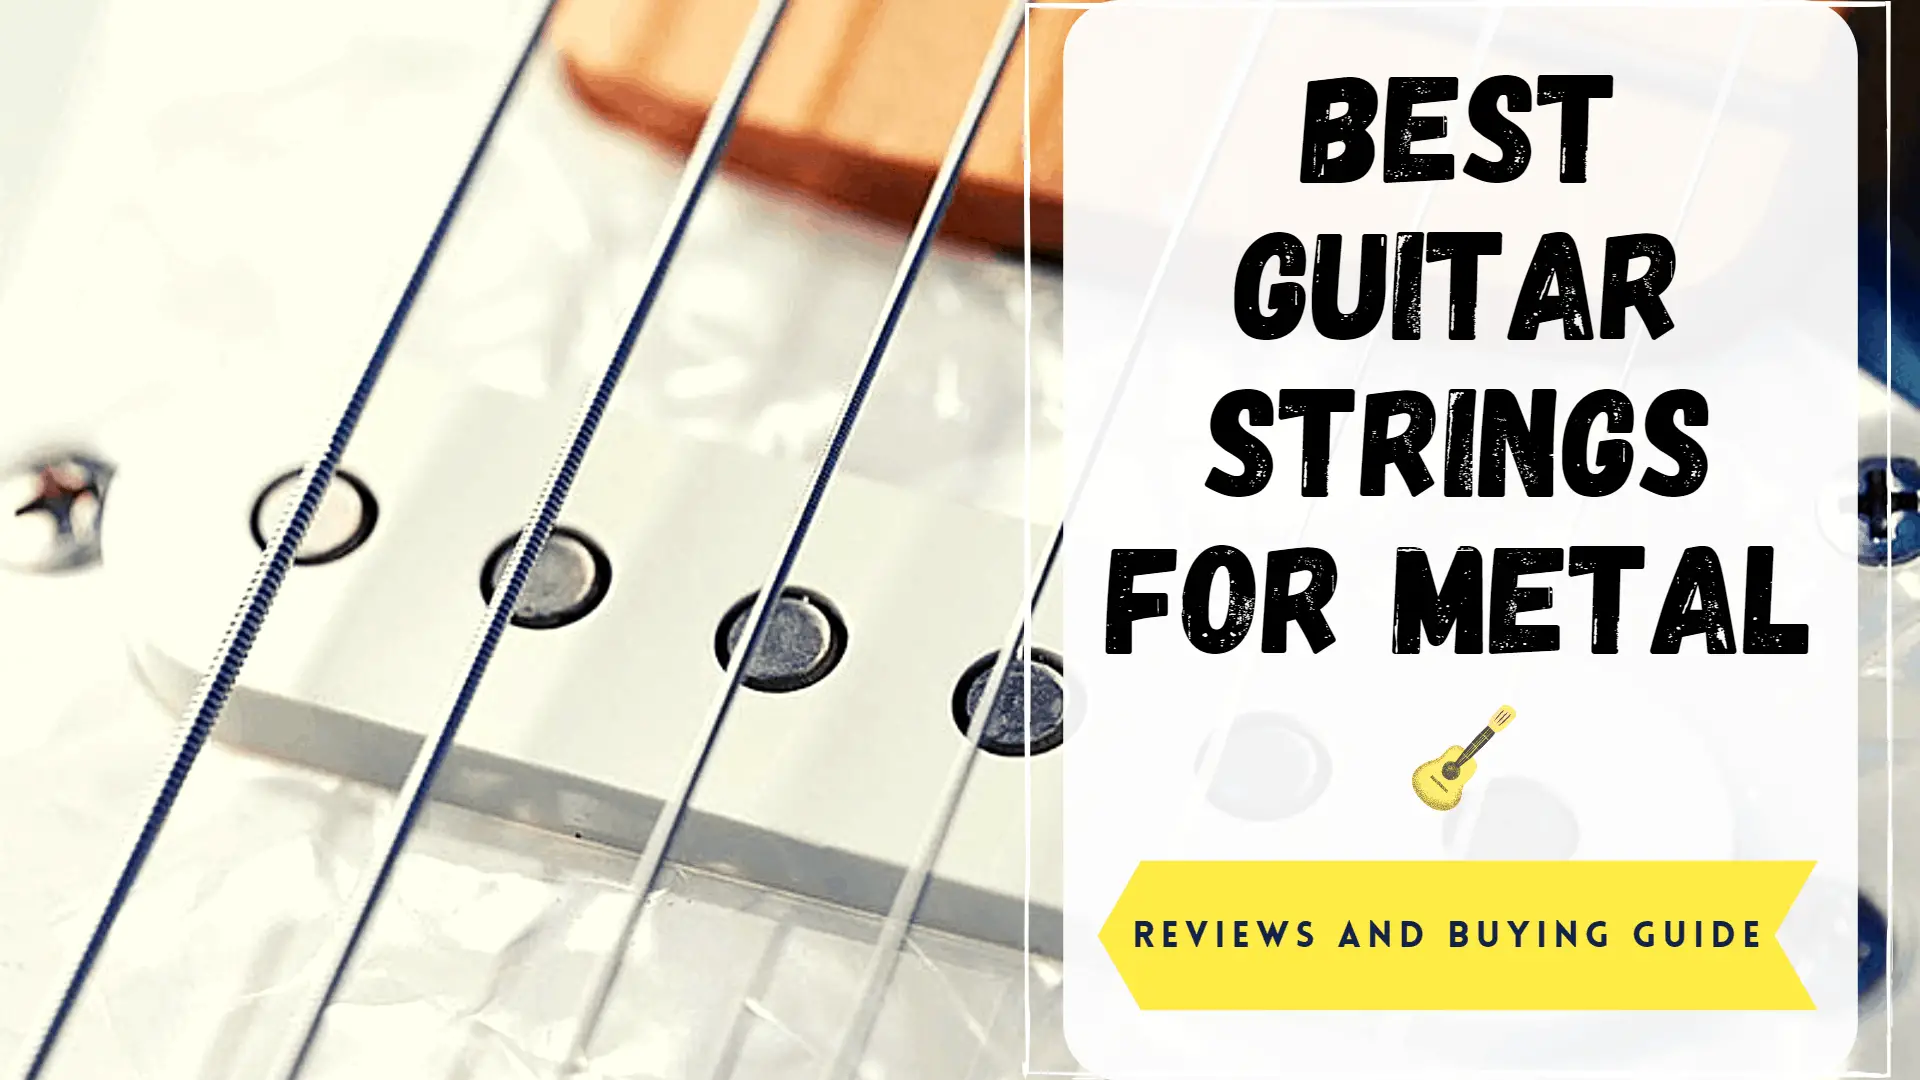 Top 15 Best Guitar Strings For Metal Reviews In 2020